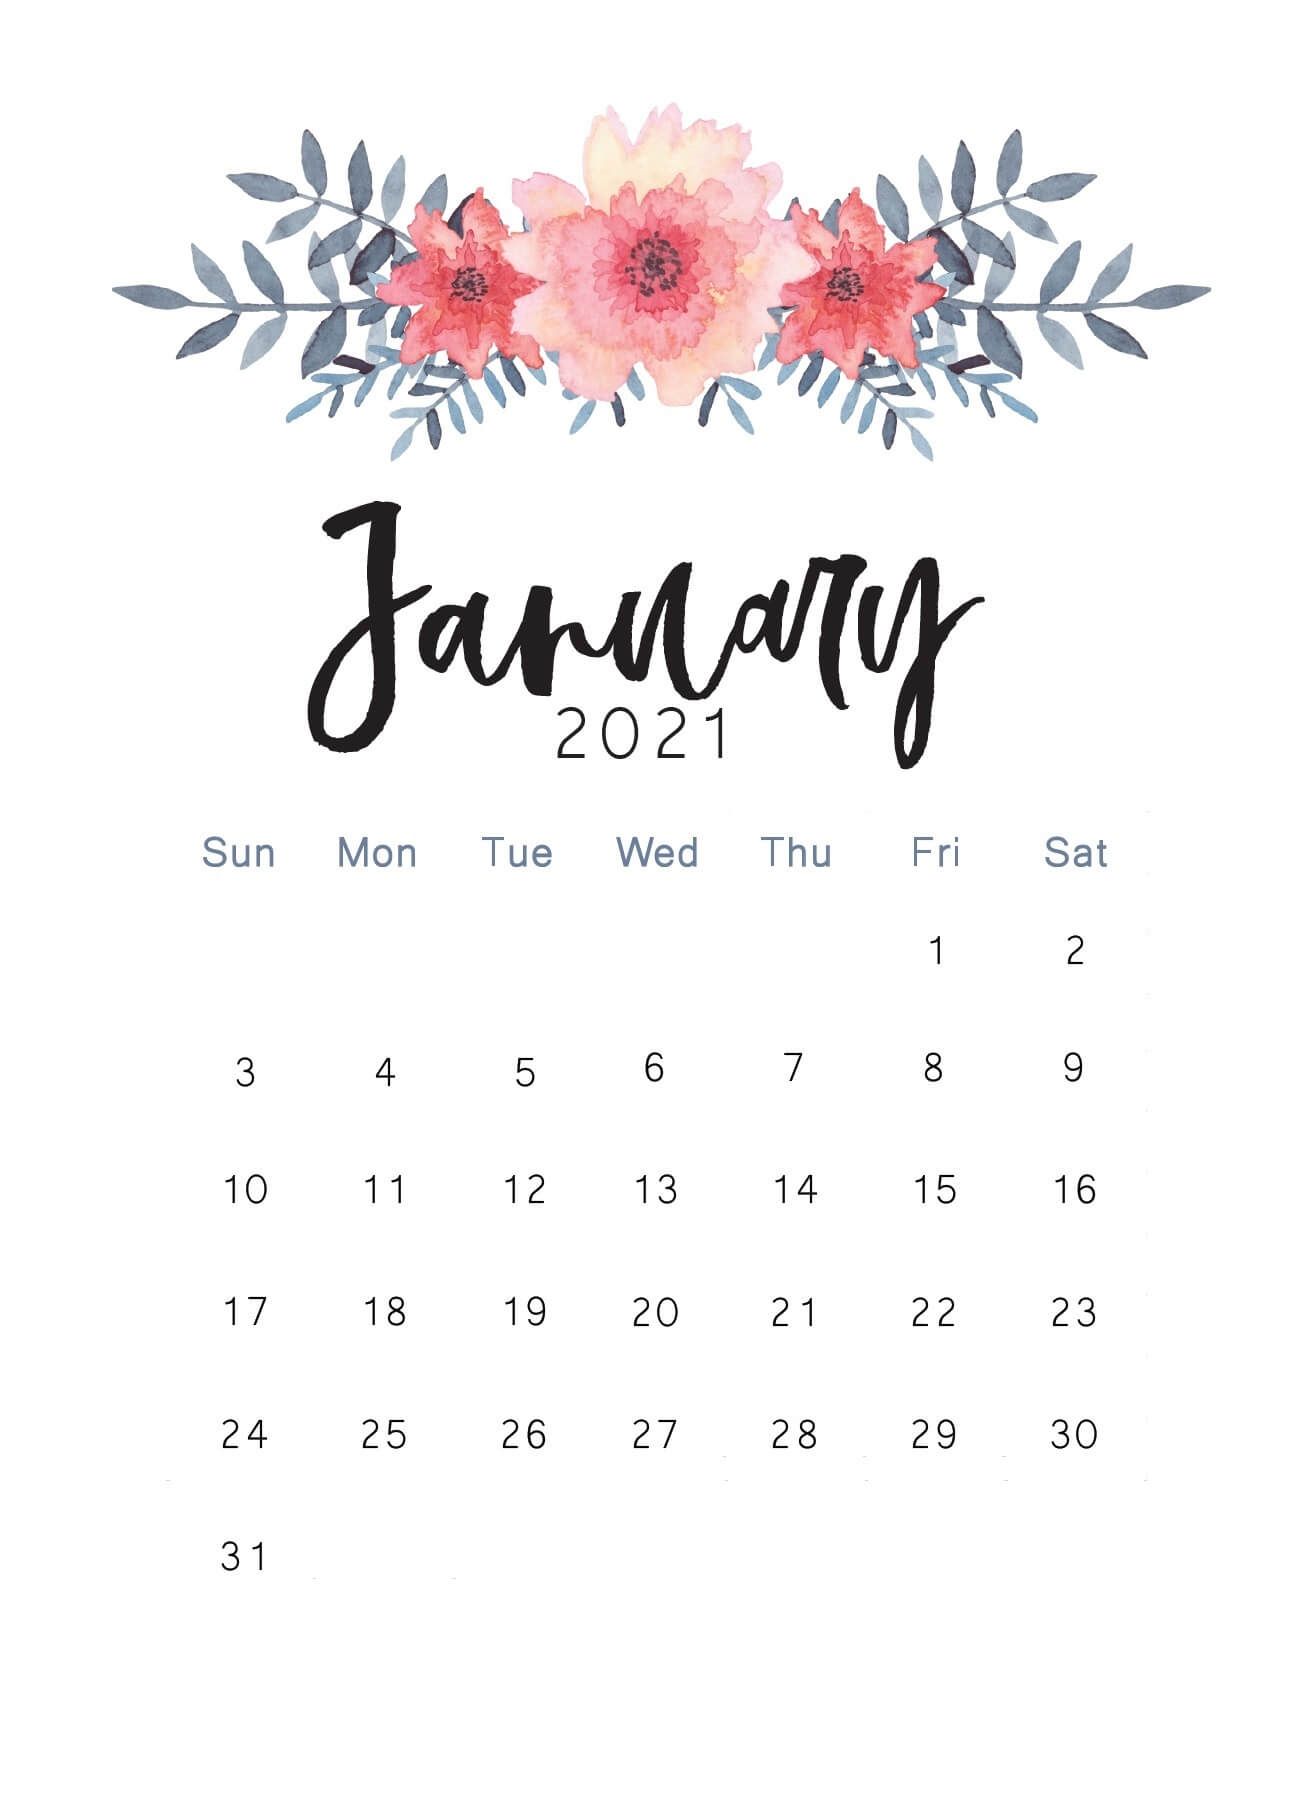 January 2021 Wallpapers Calendar : January Calendar 2021 Wallpaper